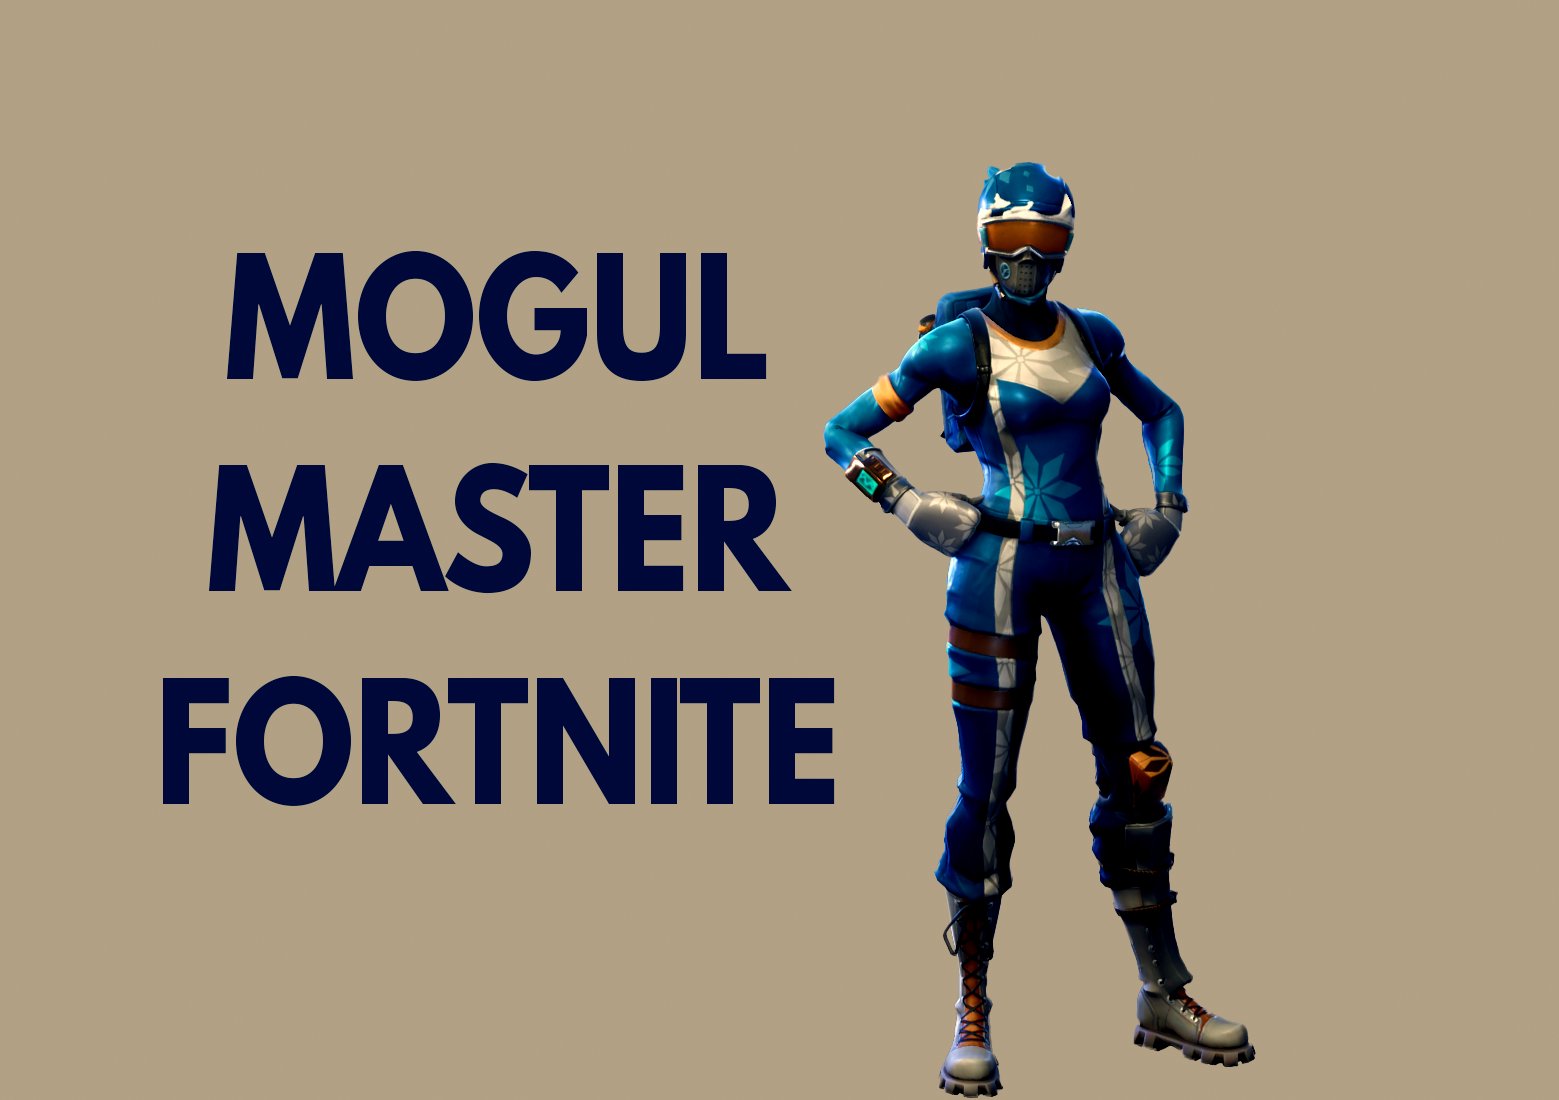 Mogul Master Fortnite: A Detailed Guide About Mogul Master Skin In Fortnite